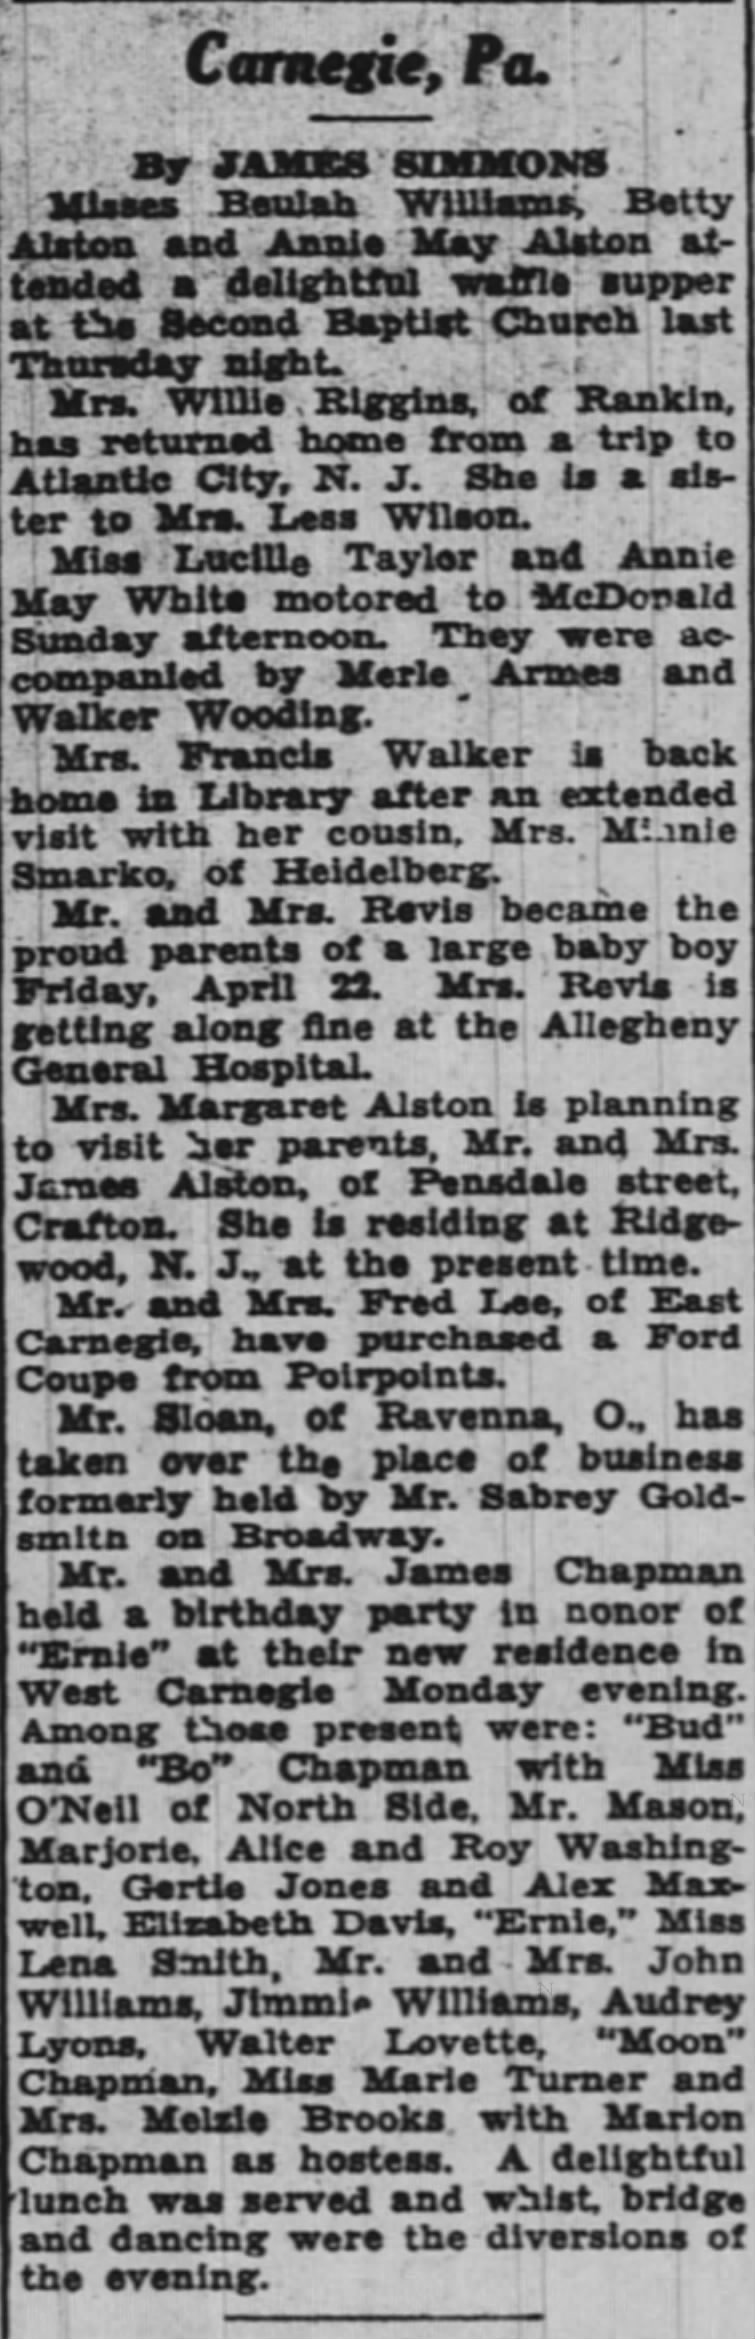 James E Chapman, Sr Carnegie (The Pittsburgh Courier 04-30-1932, pg 19)